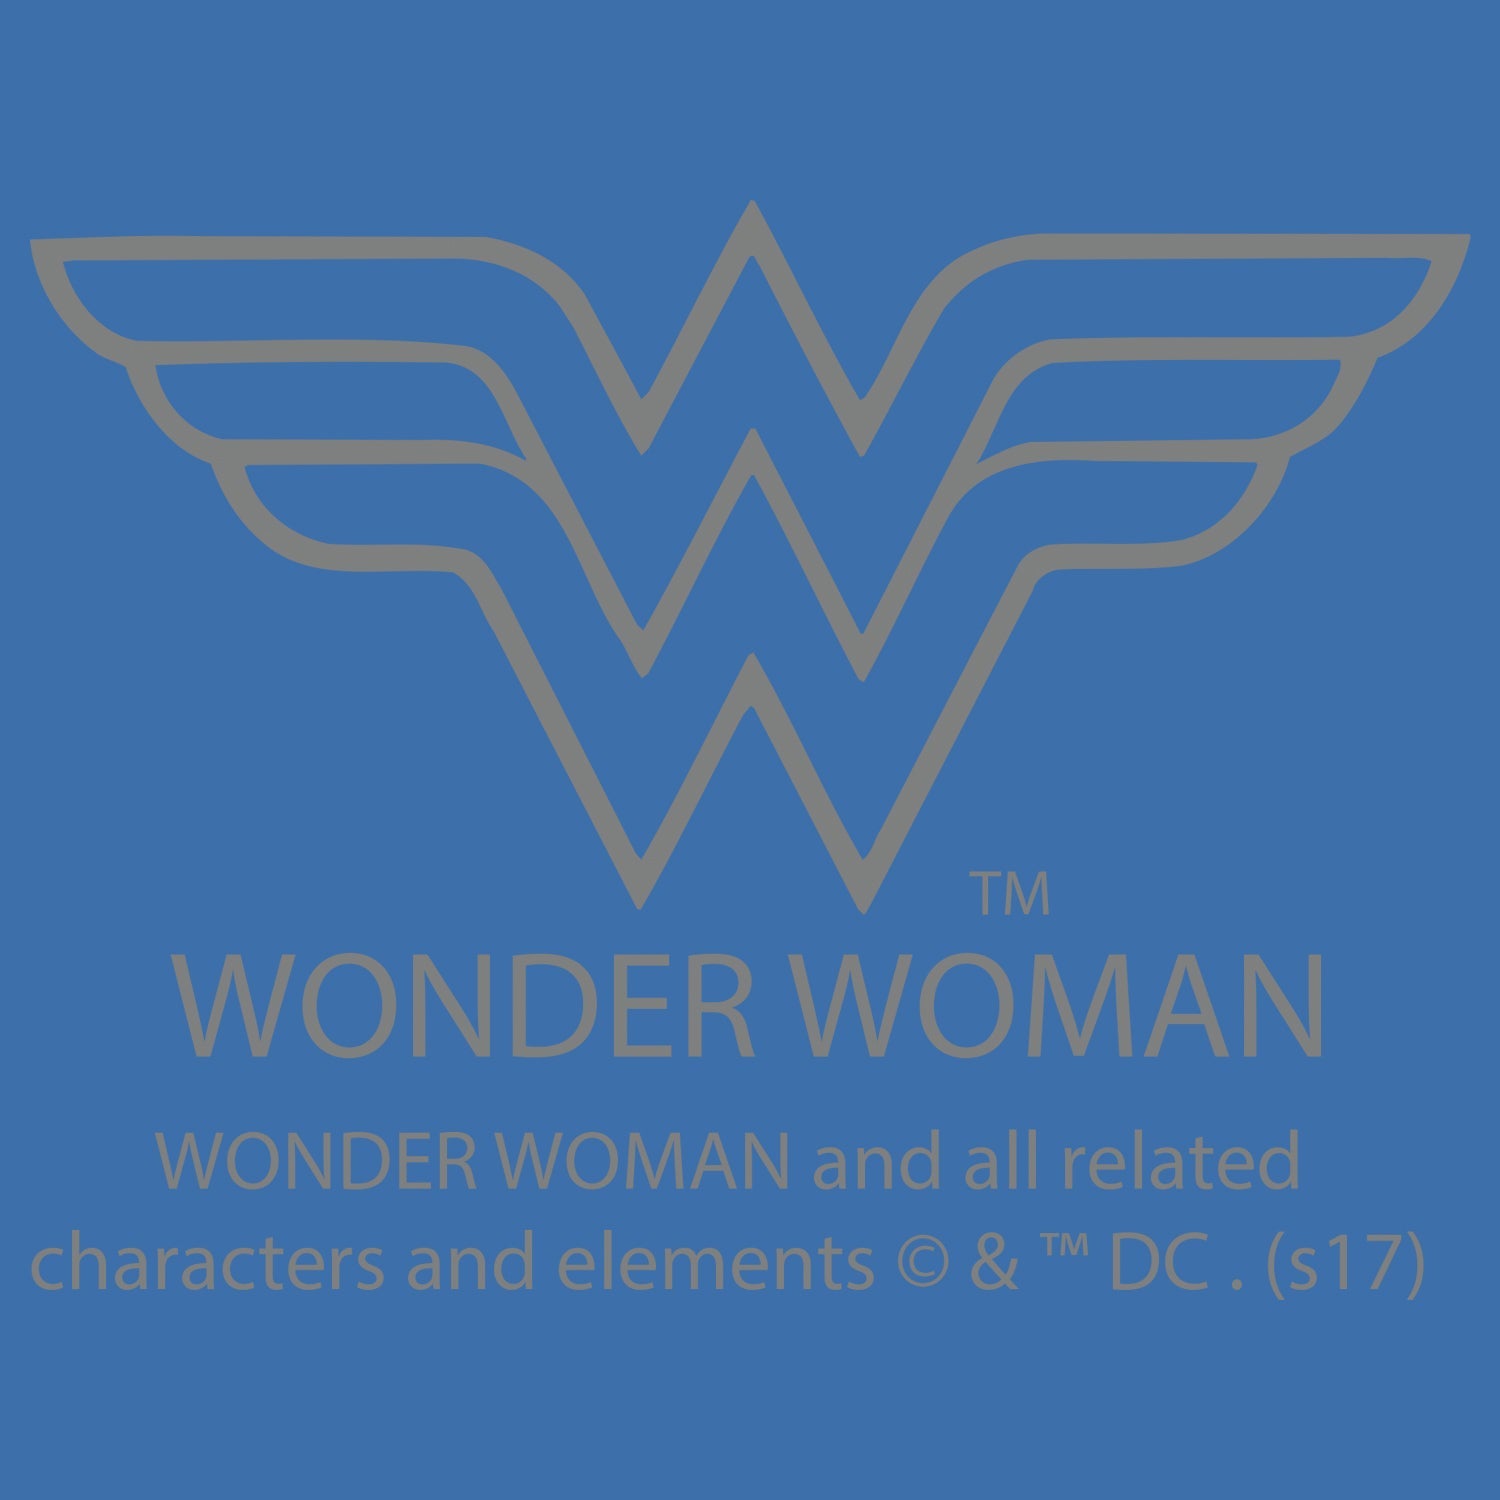 DC Comics Wonder Woman Logo Classic Official Women's T-shirt ()